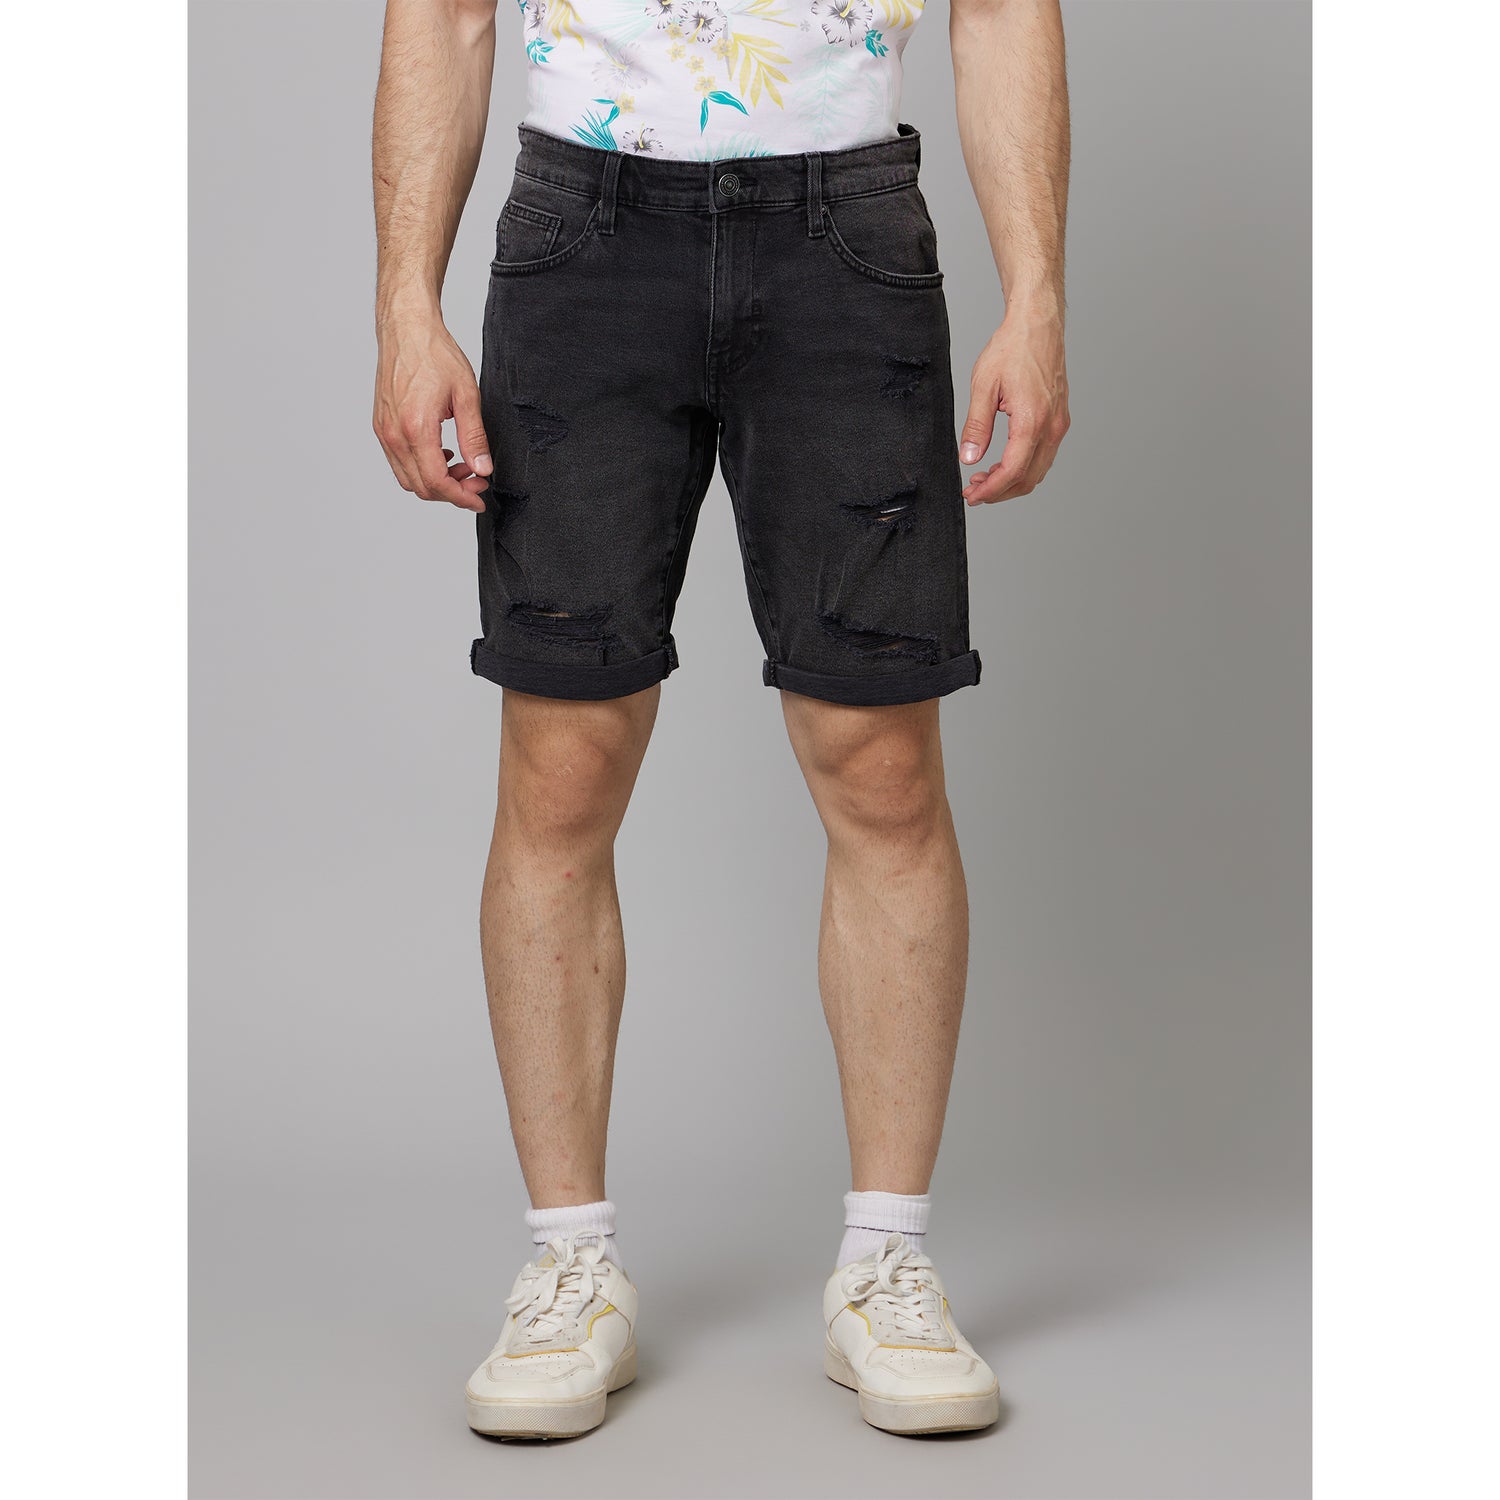 Black Distressed Cotton Denim Shorts (DODENIMBM)